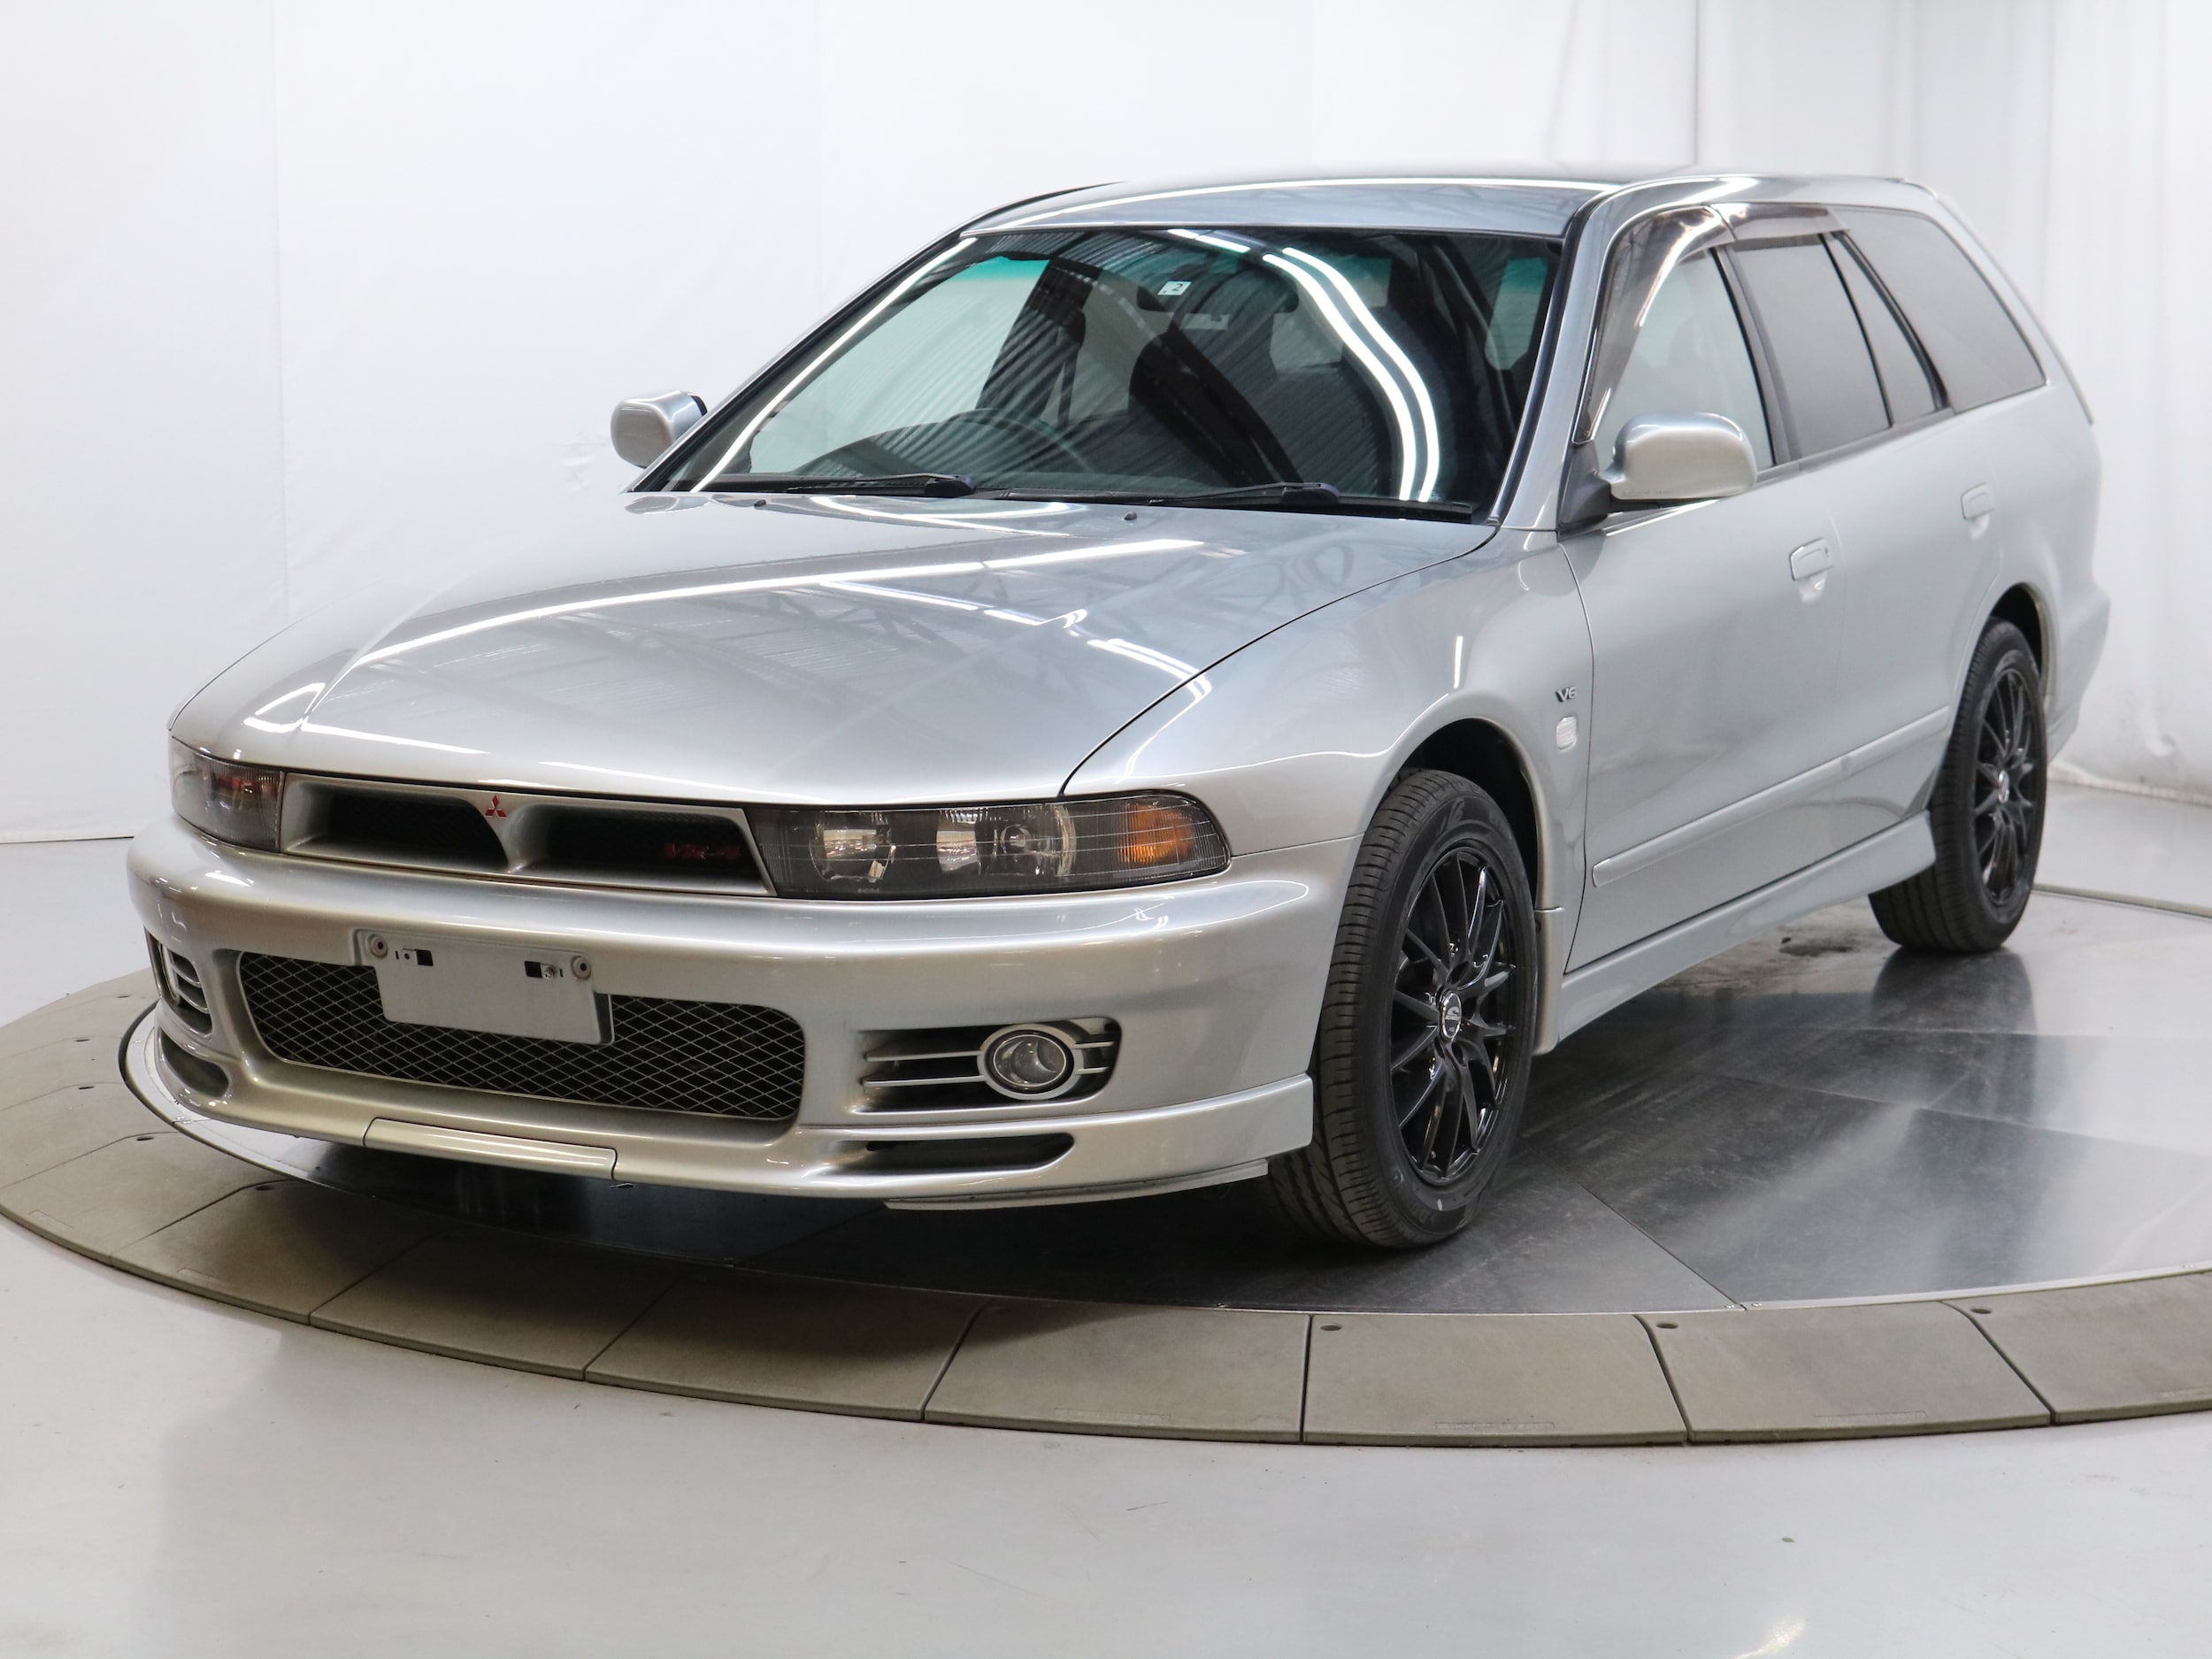 1998 Mitsubishi Legnum 2